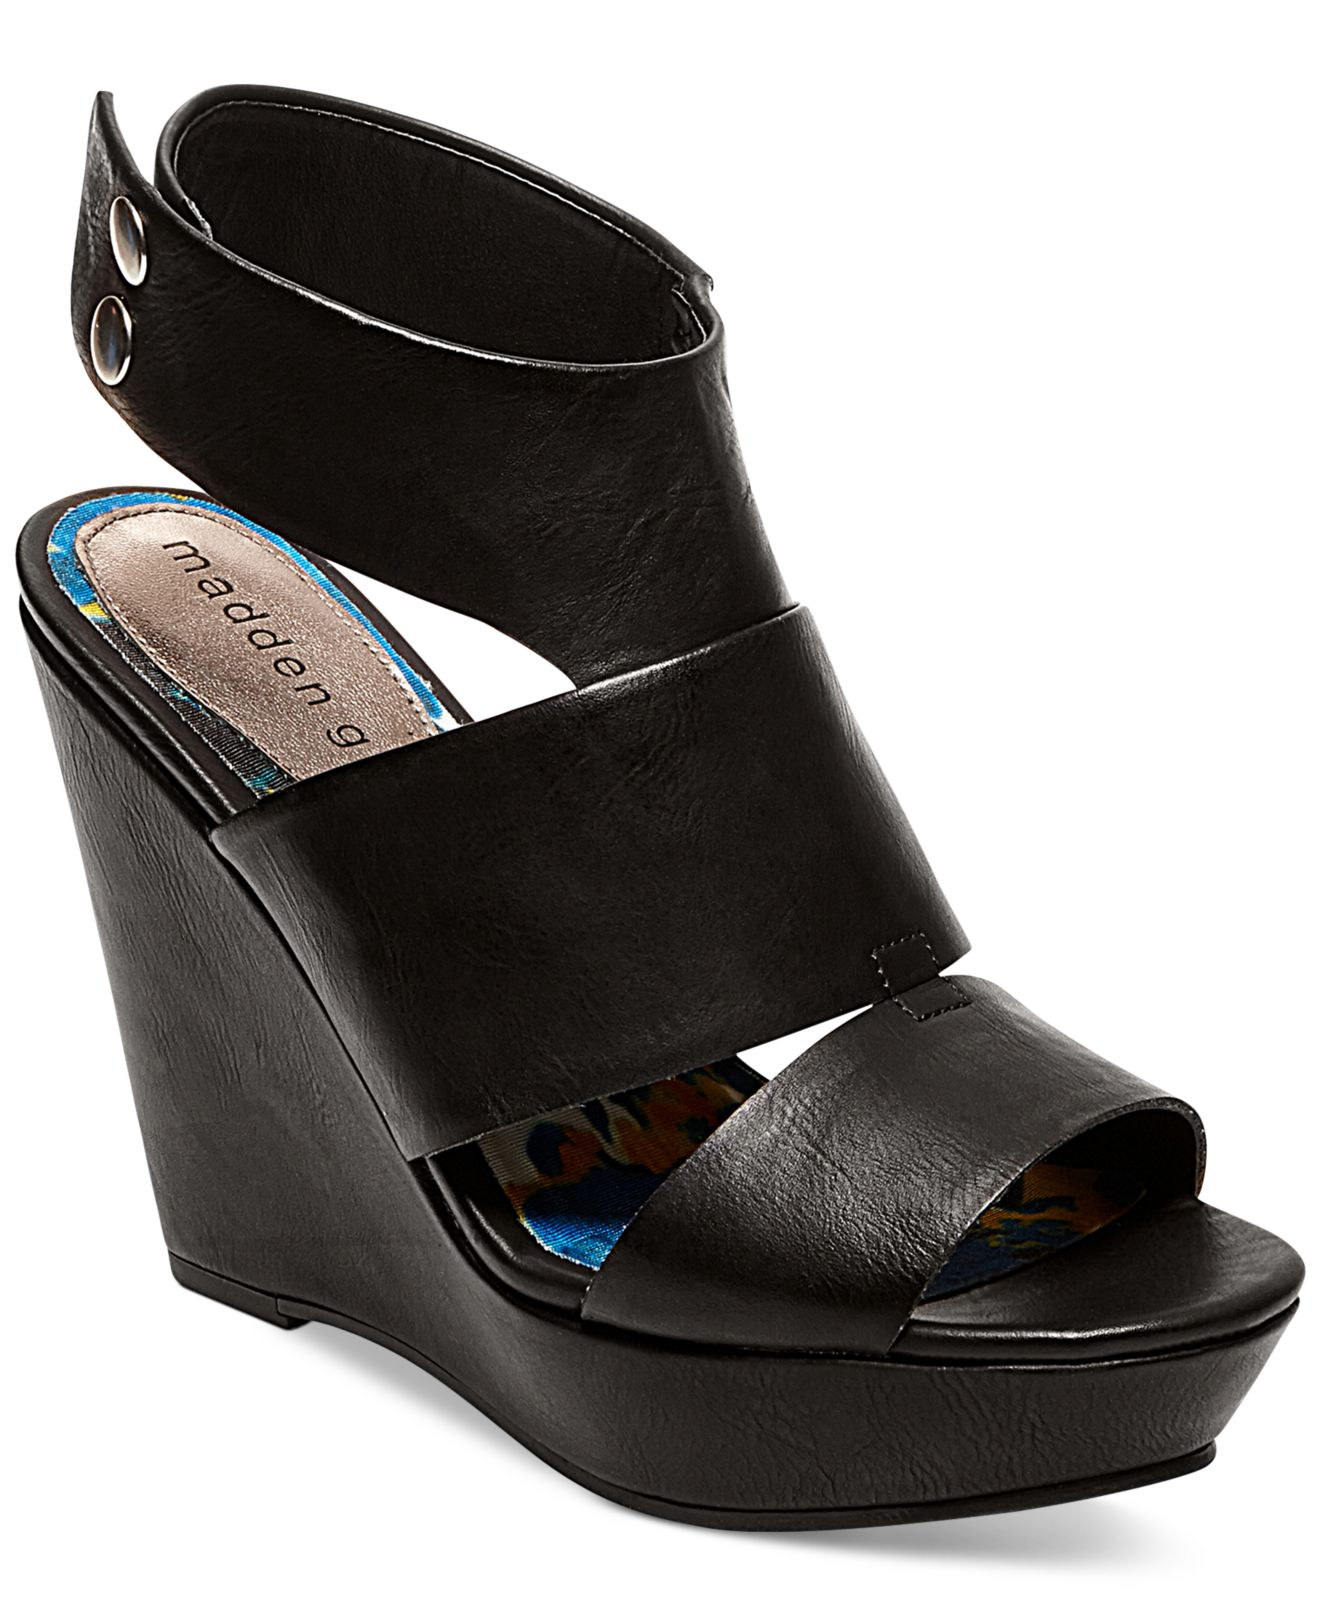 Madden Girl Kilter Platform Wedge  Sandals  in Black  Lyst